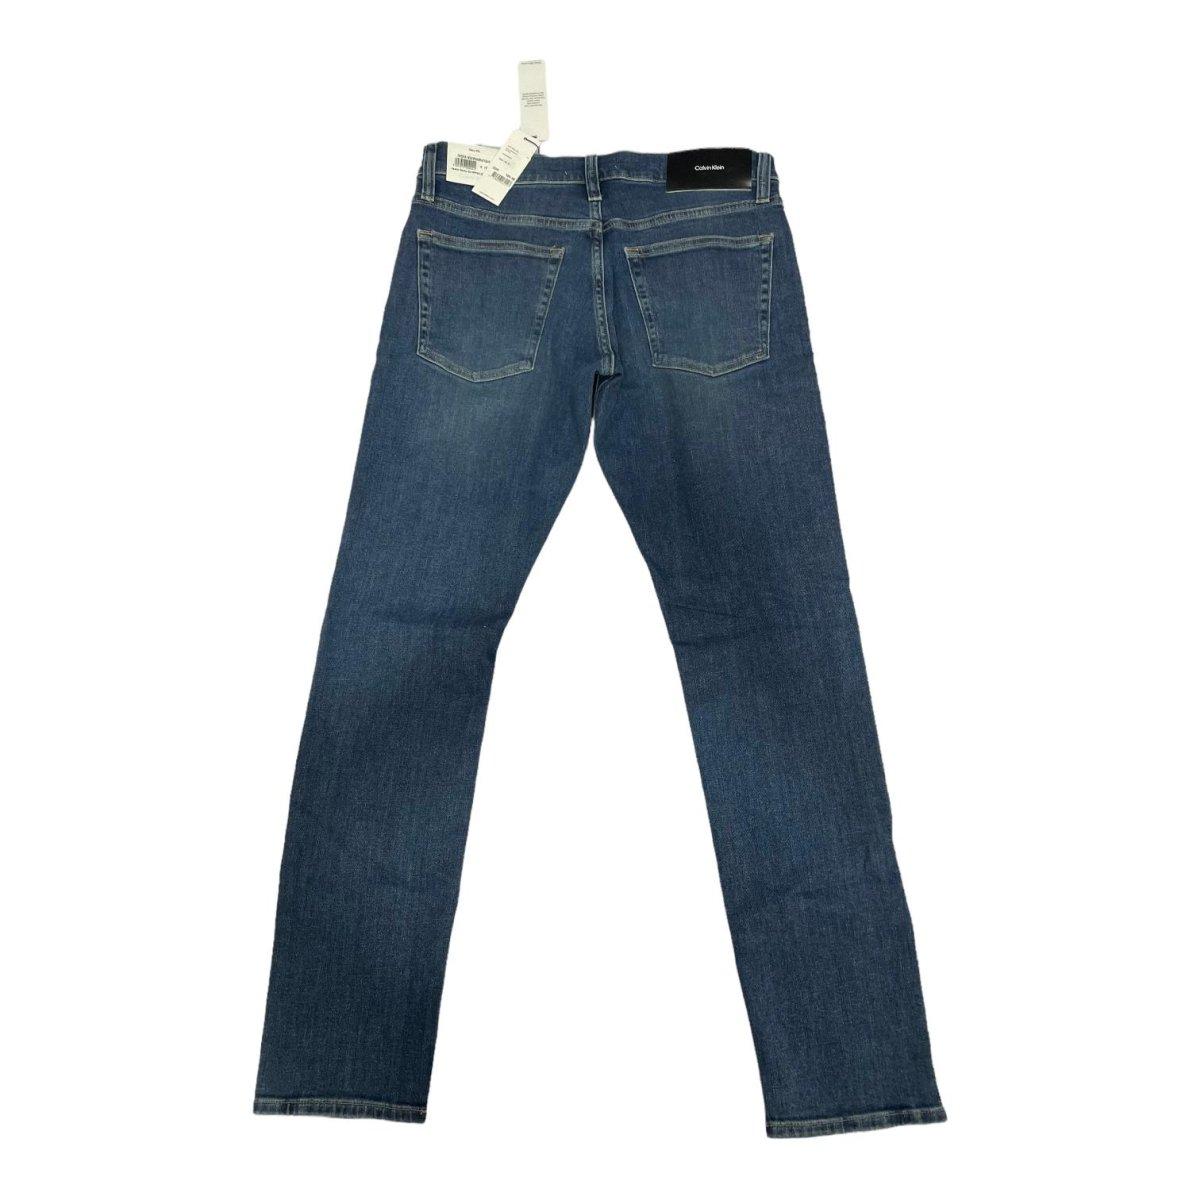 Jeans Uomo Ck 109923